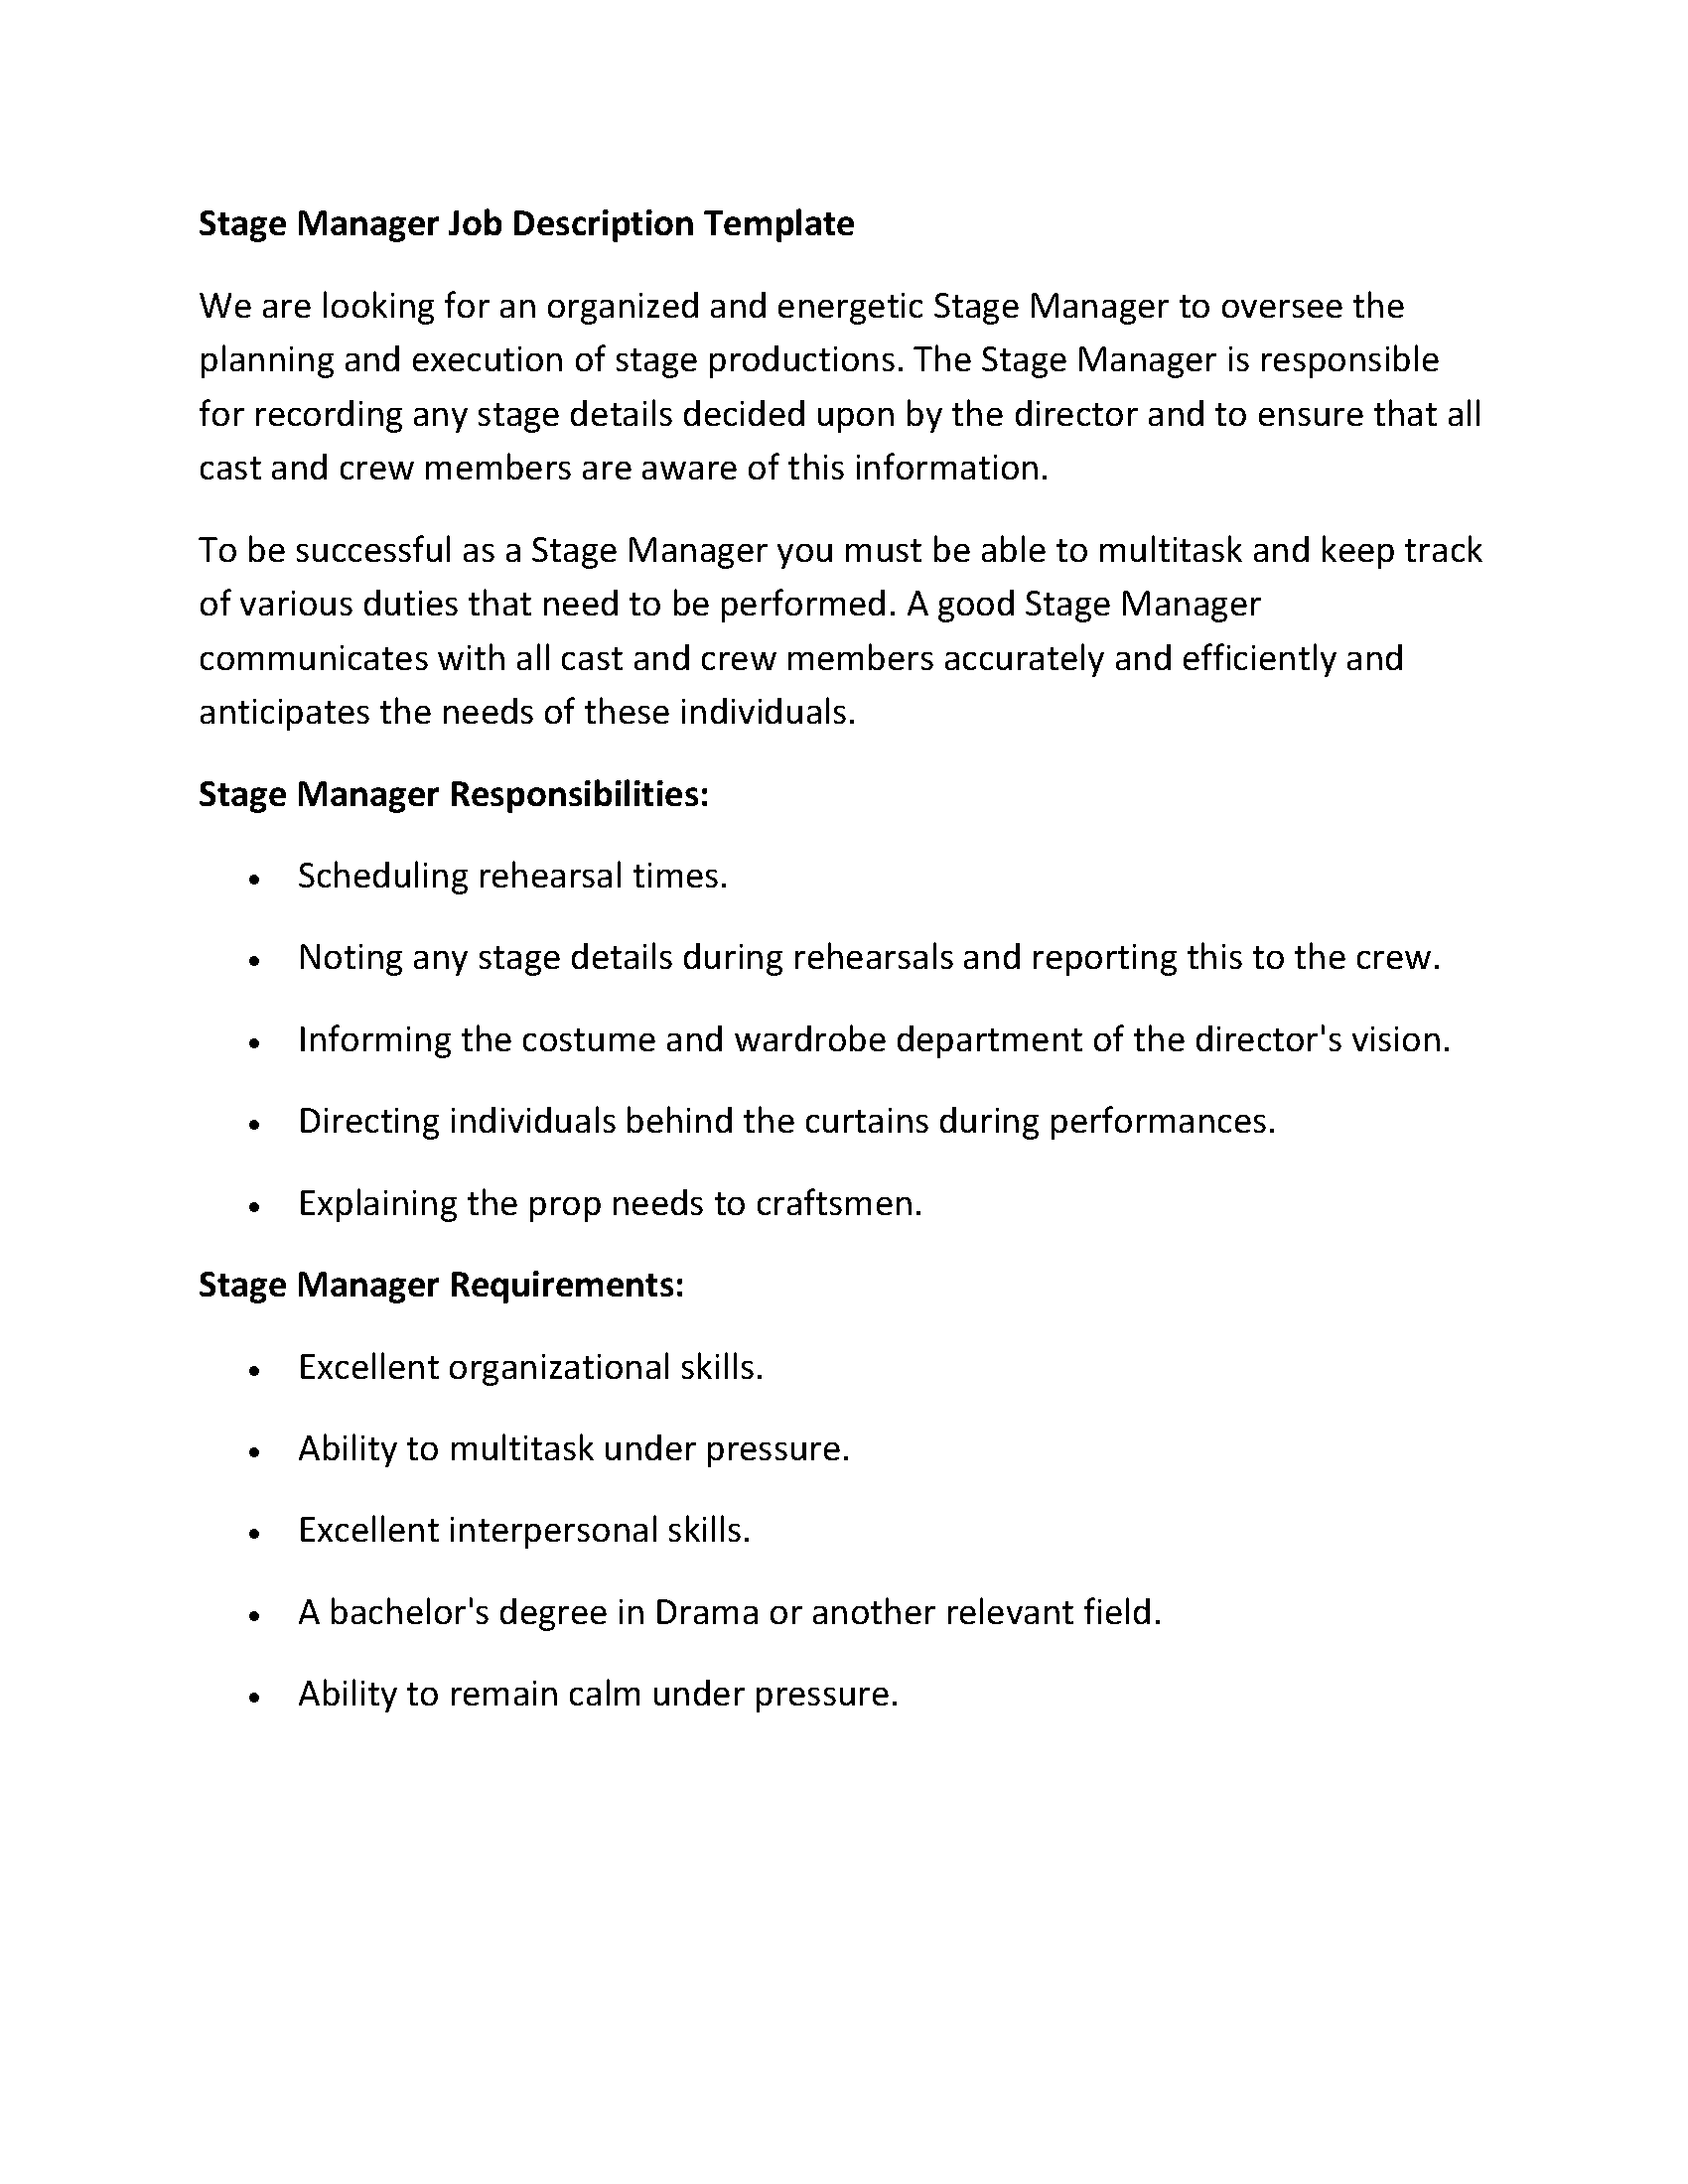 Stage Manager Job Description Template